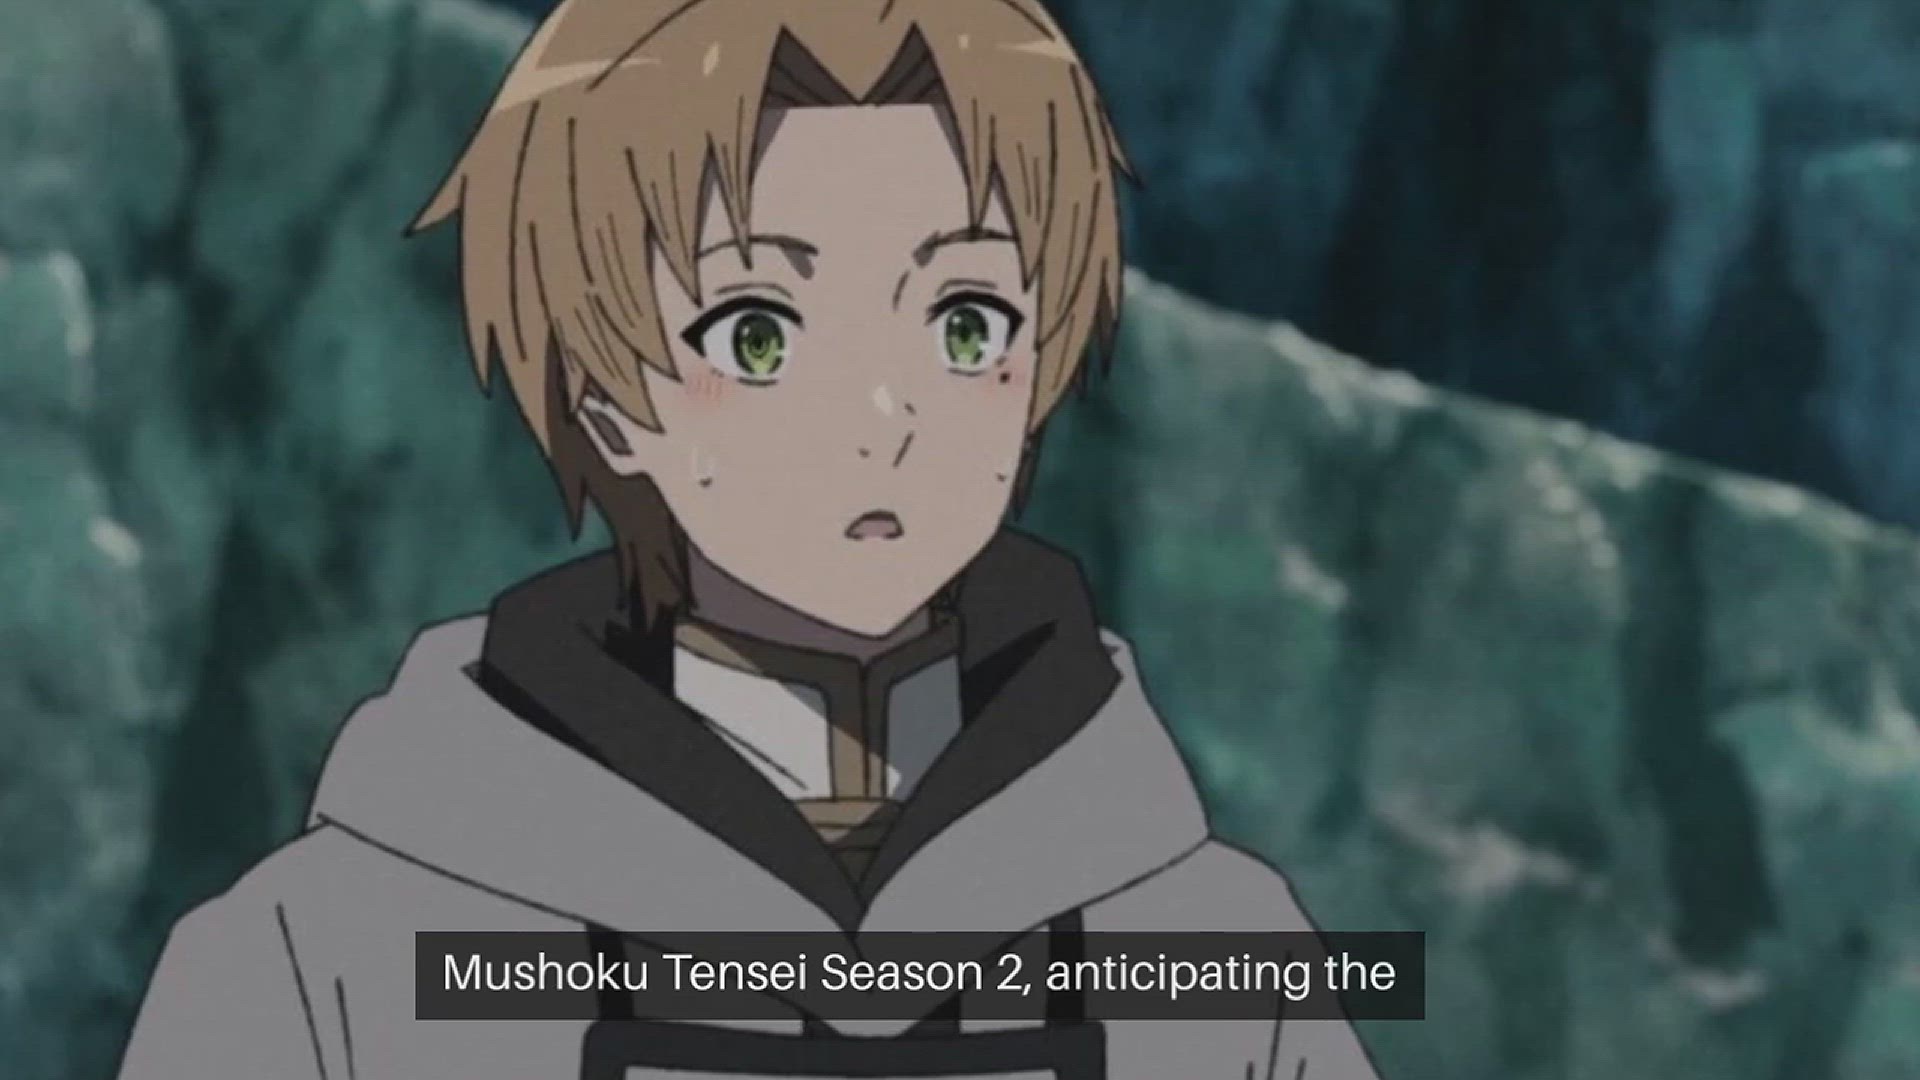 Mushoku Tensei Season 2 Part 2 Premieres in April 2024, Gets